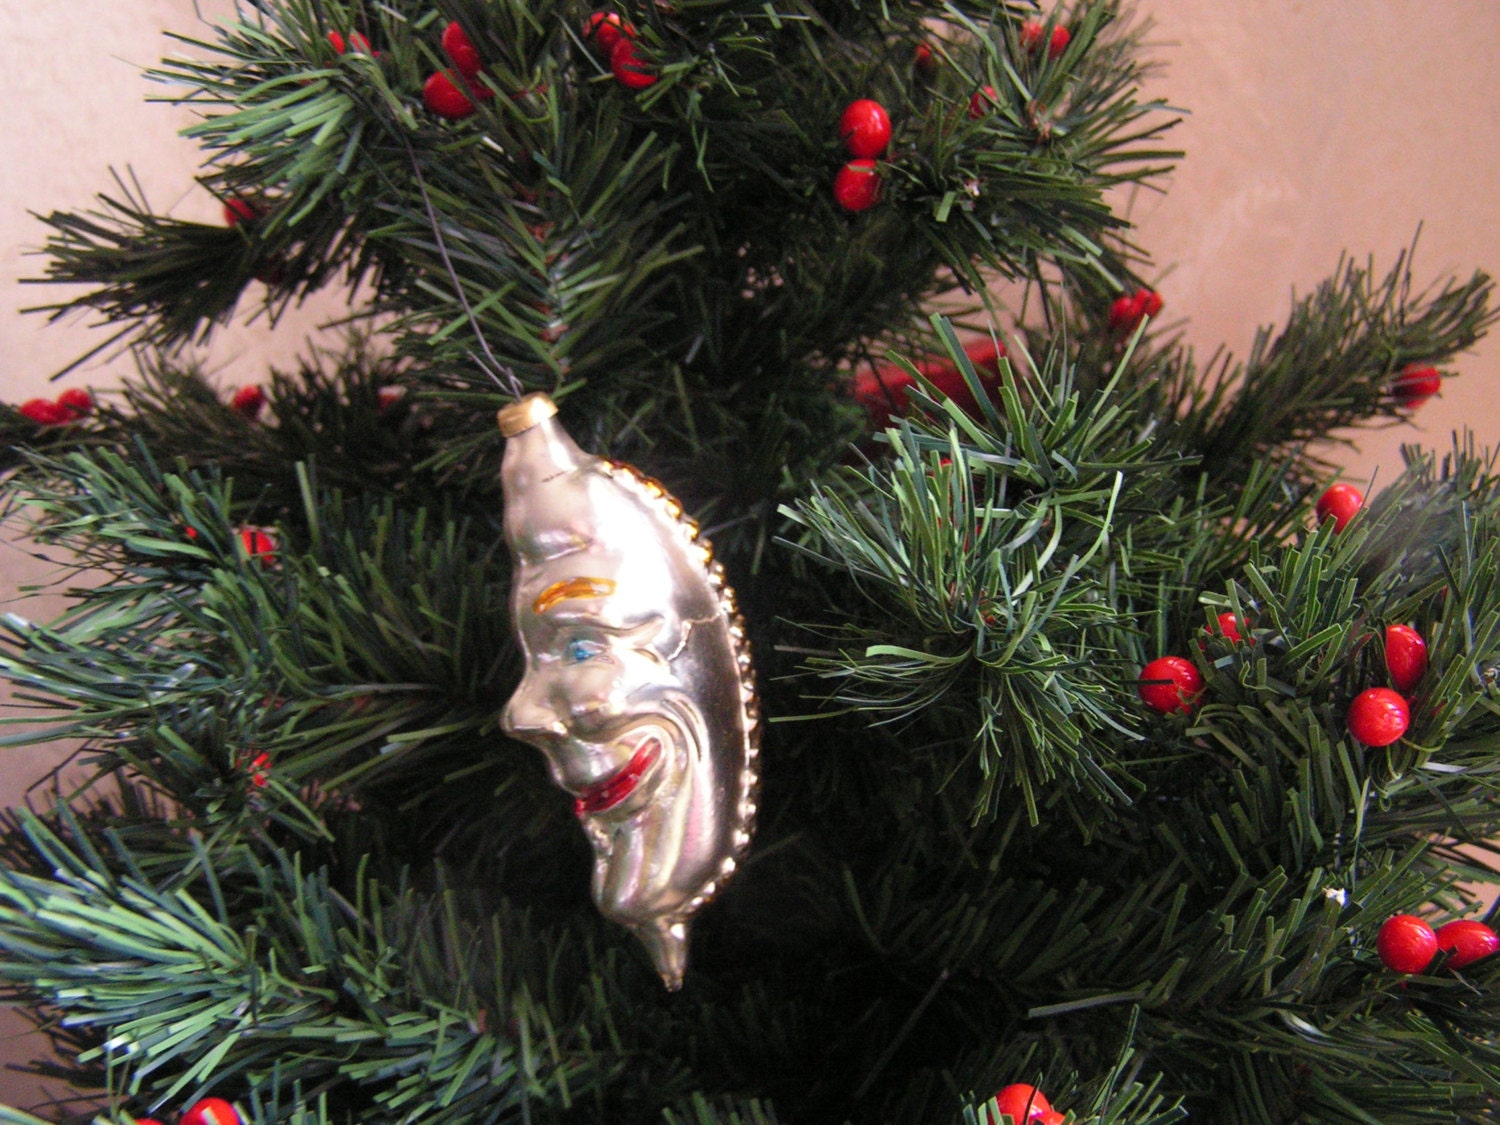 man in the moon, moon face Christmas tree ornament in vintage - LaVintageByMissPJ55